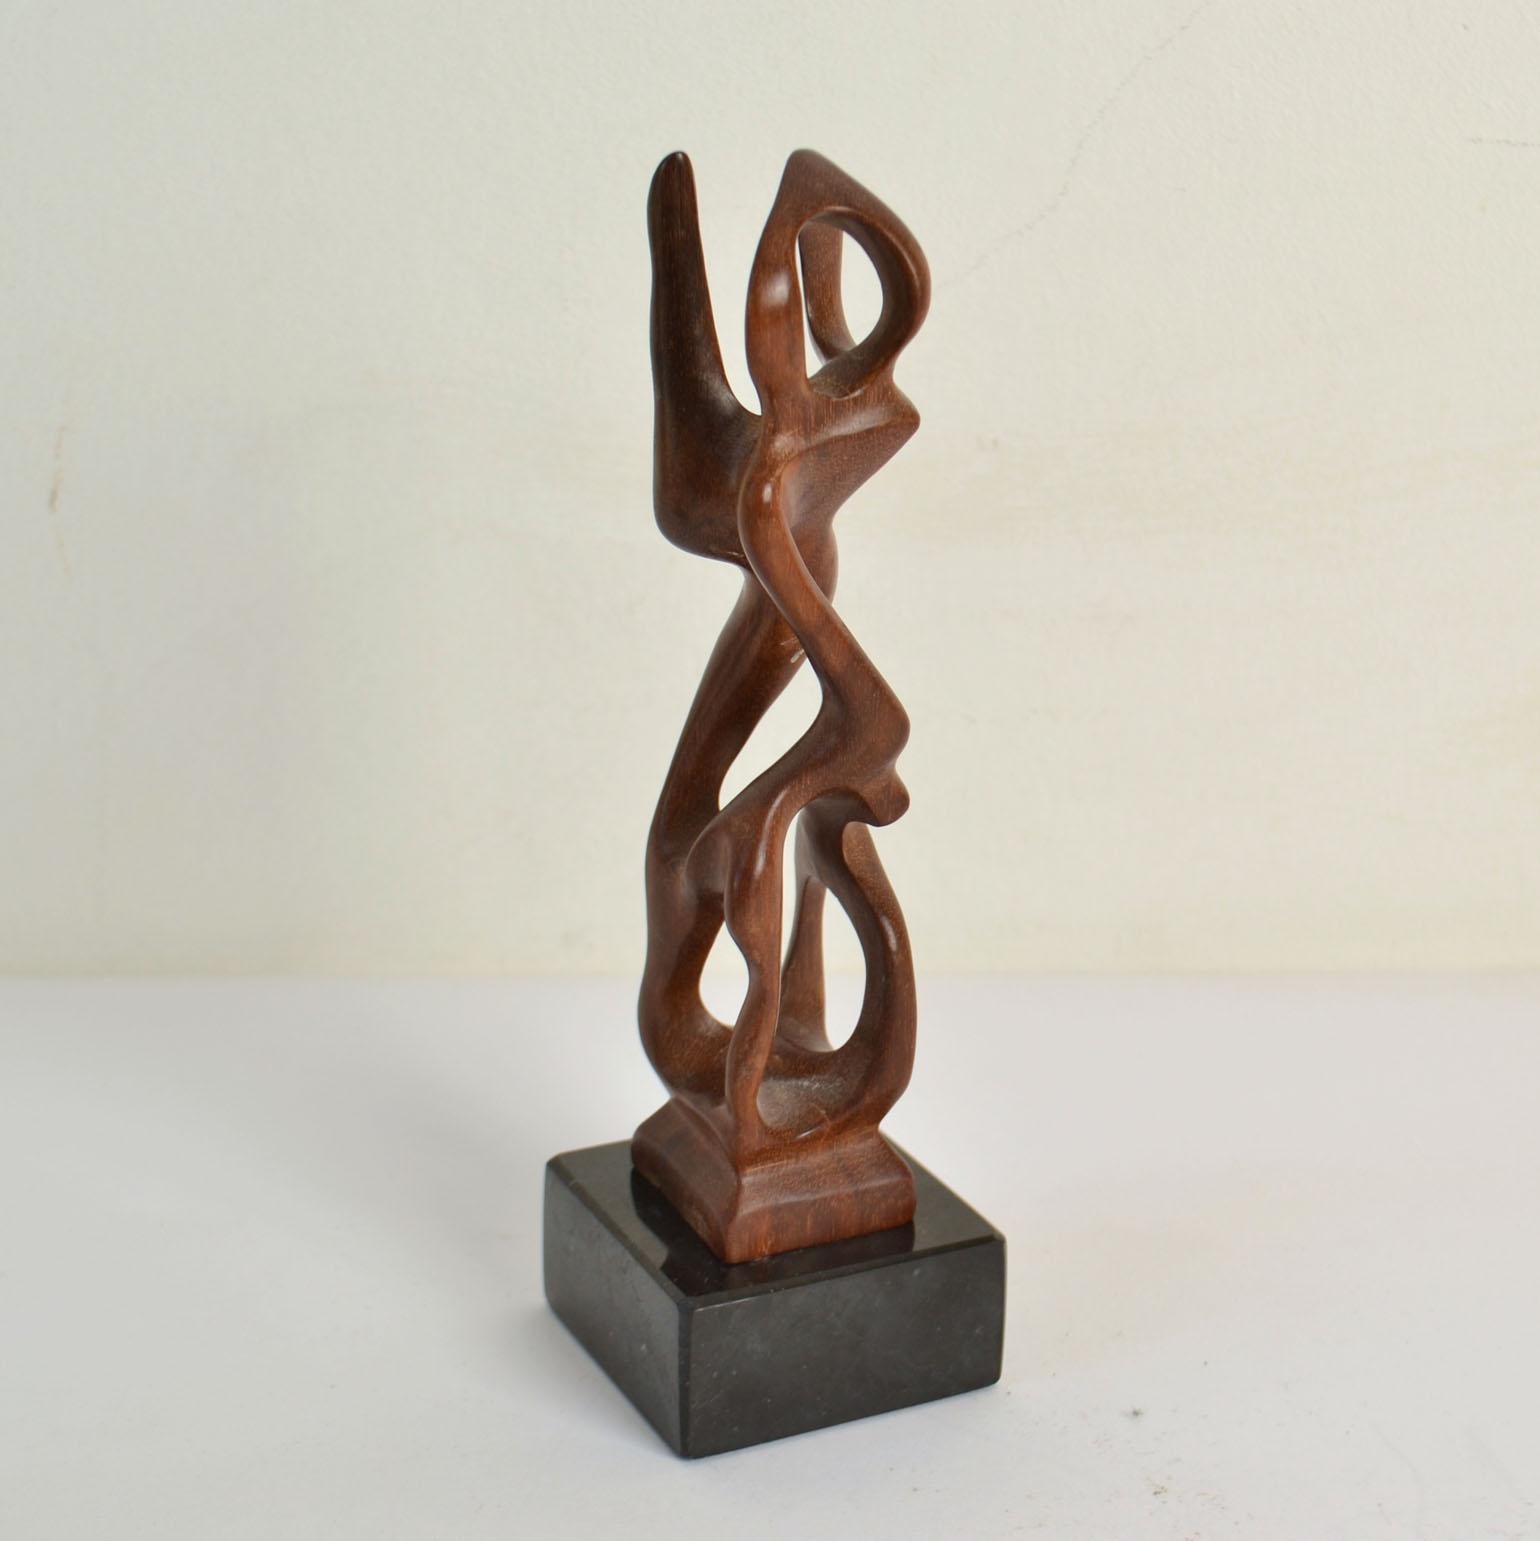 biomorphic wood sculpture